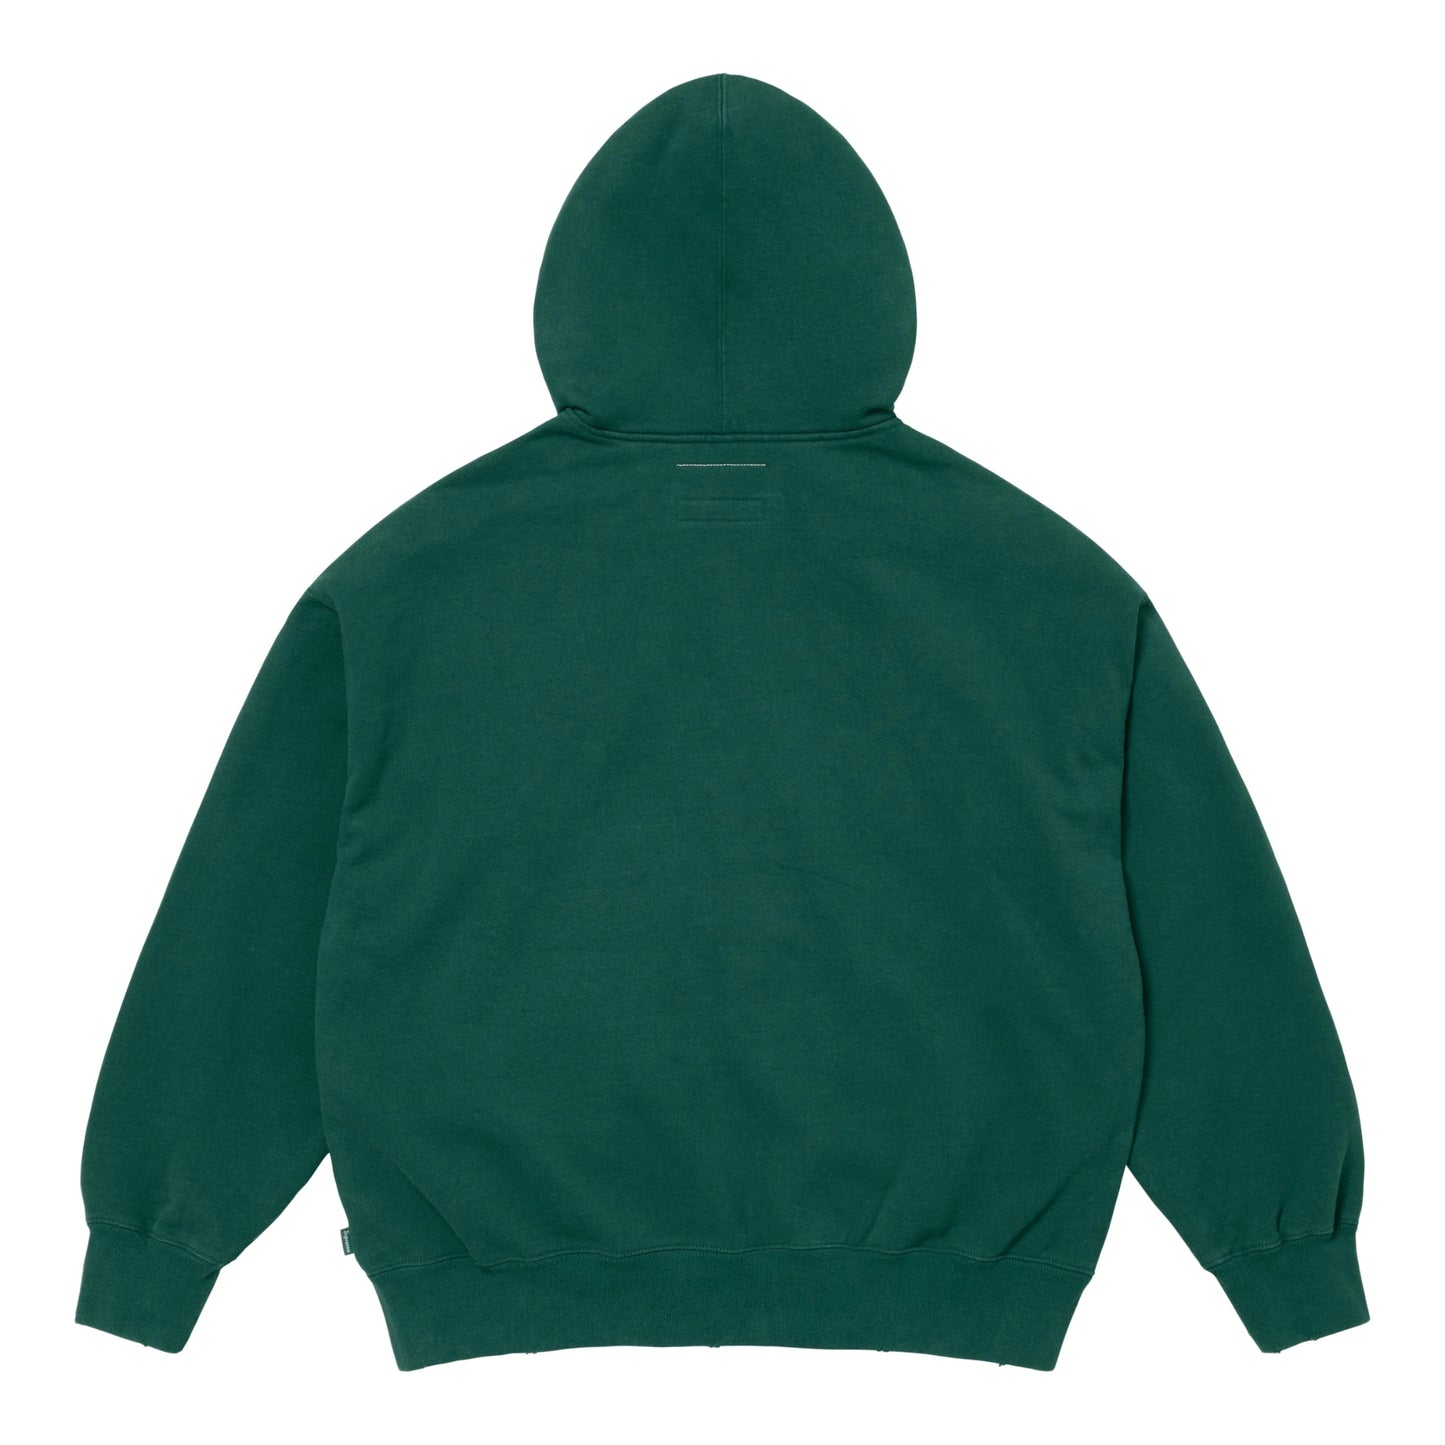 Supreme x MM6 Maison Margiela Zip Up Hooded Sweatshirt Dark Green